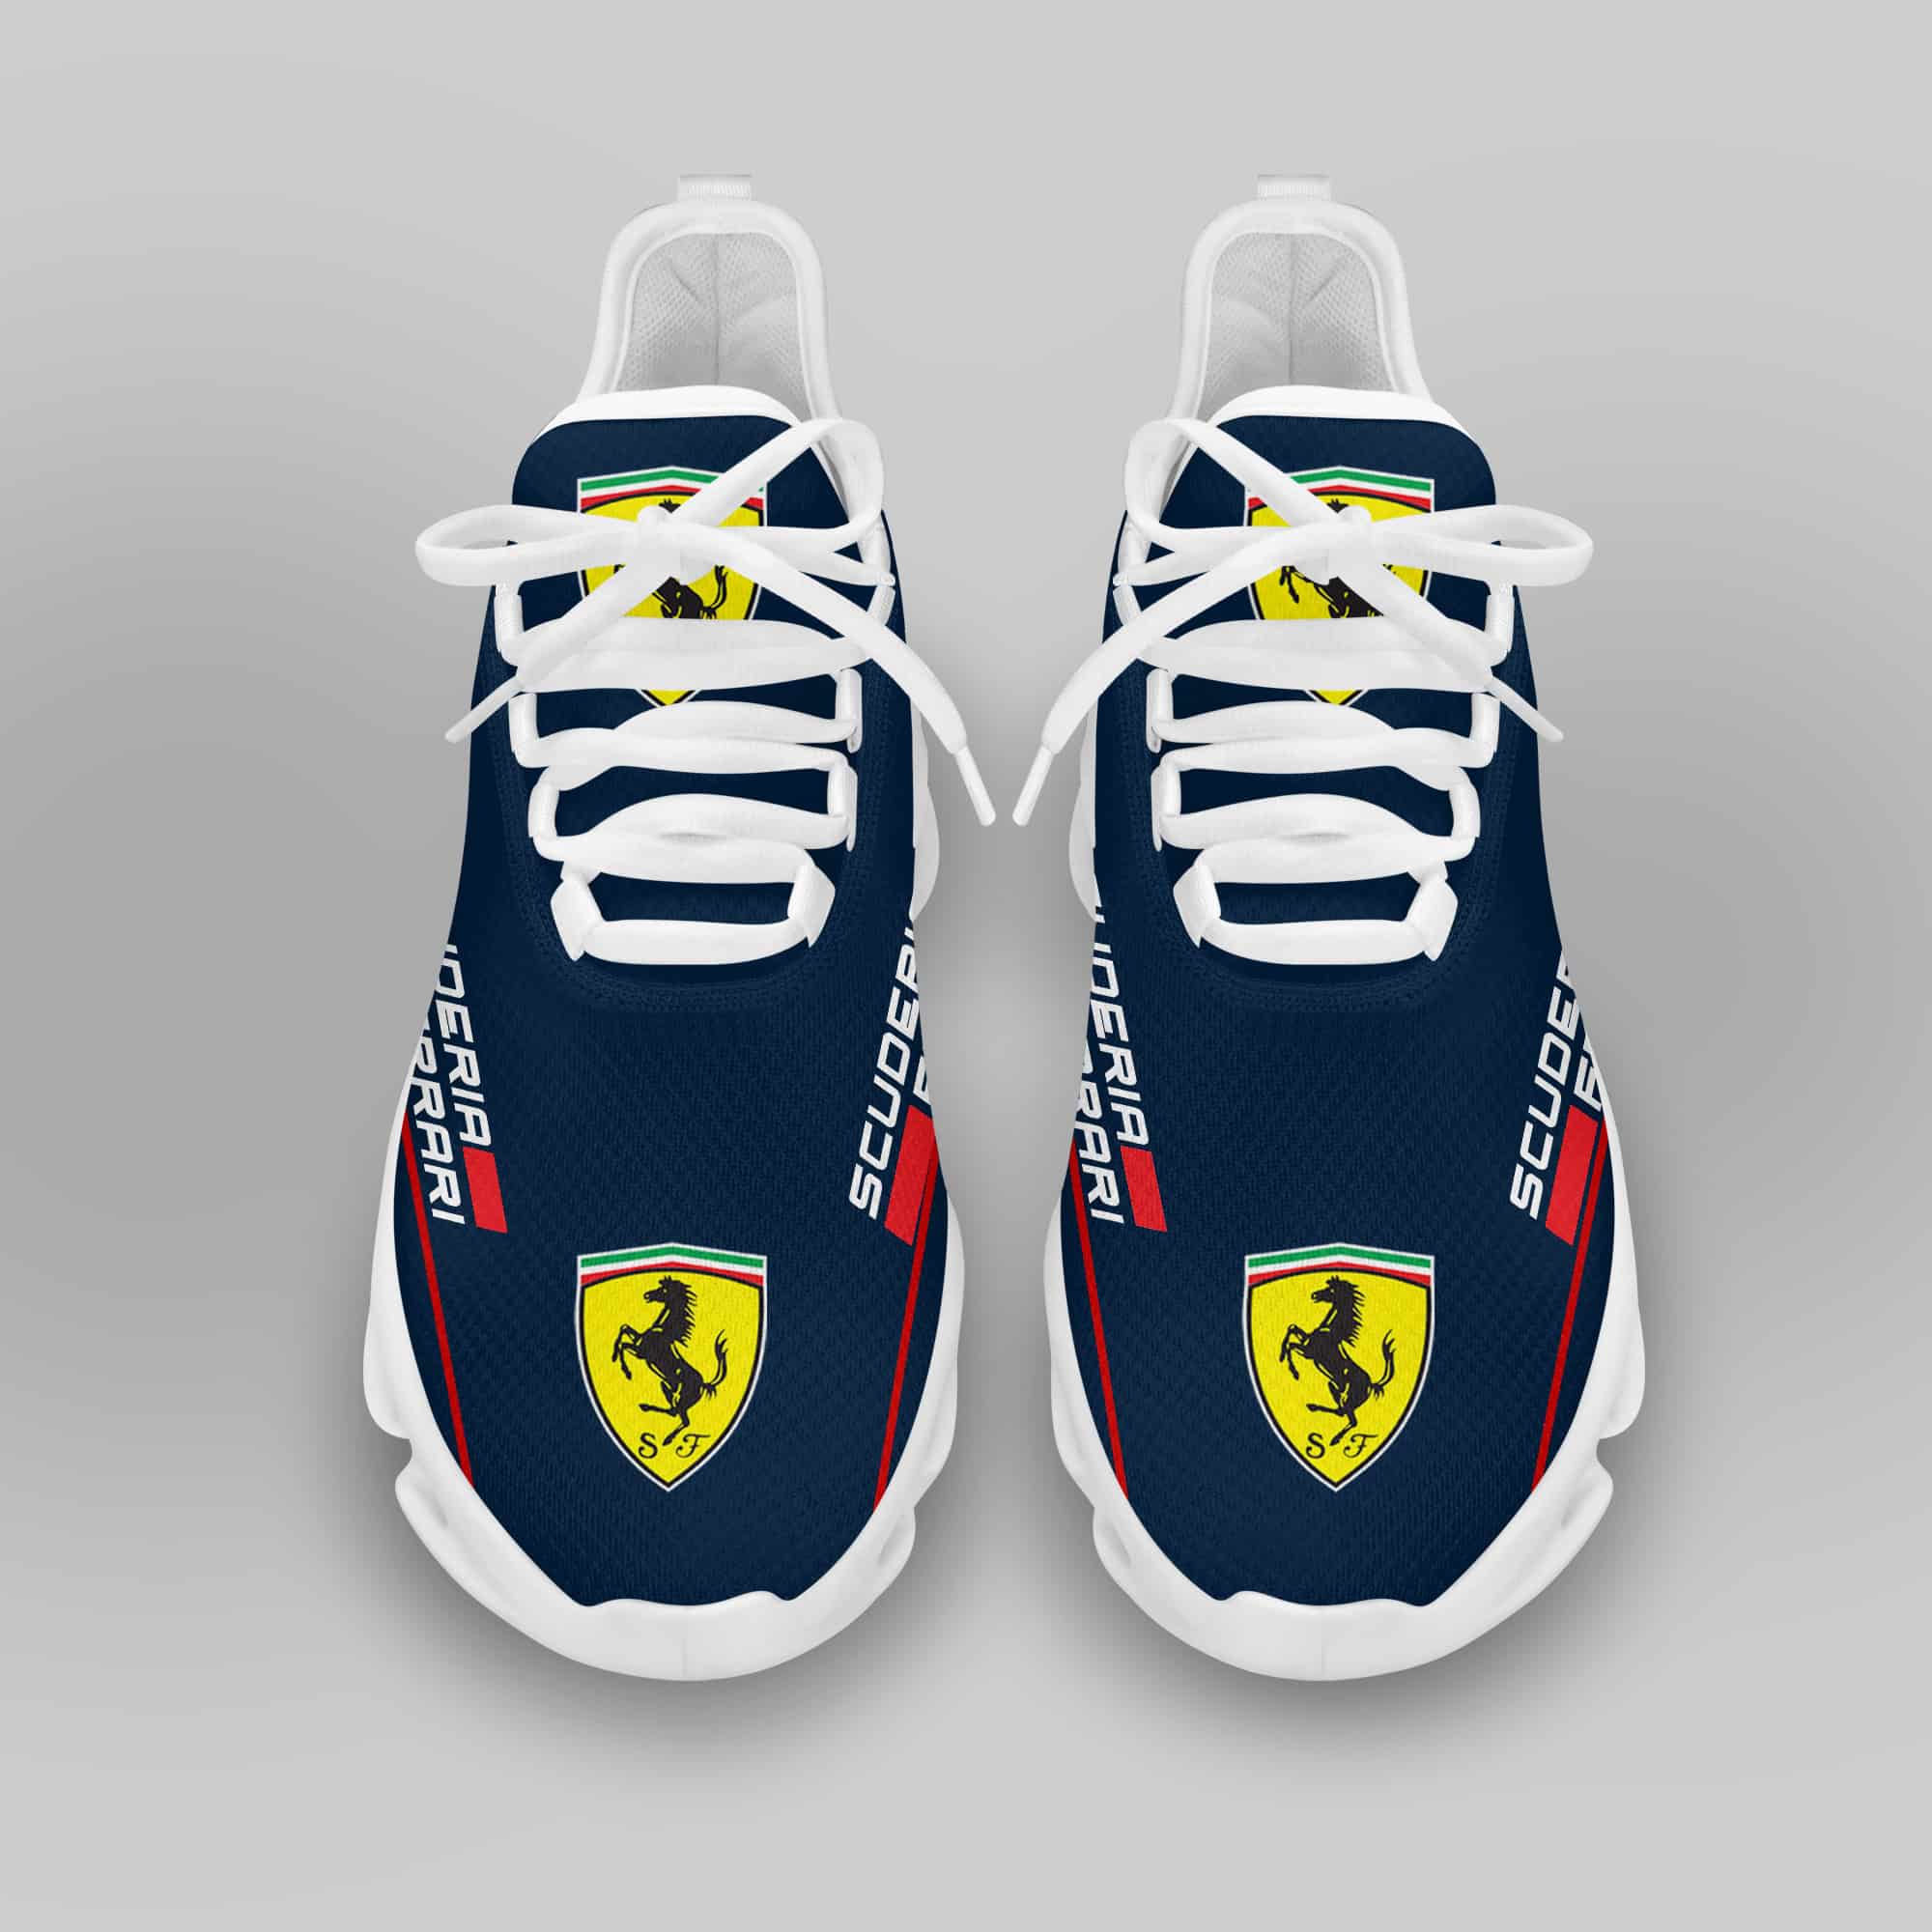 Ferrari Sneaker Running Shoes Max Soul Shoes Sneakers Ver 17 3